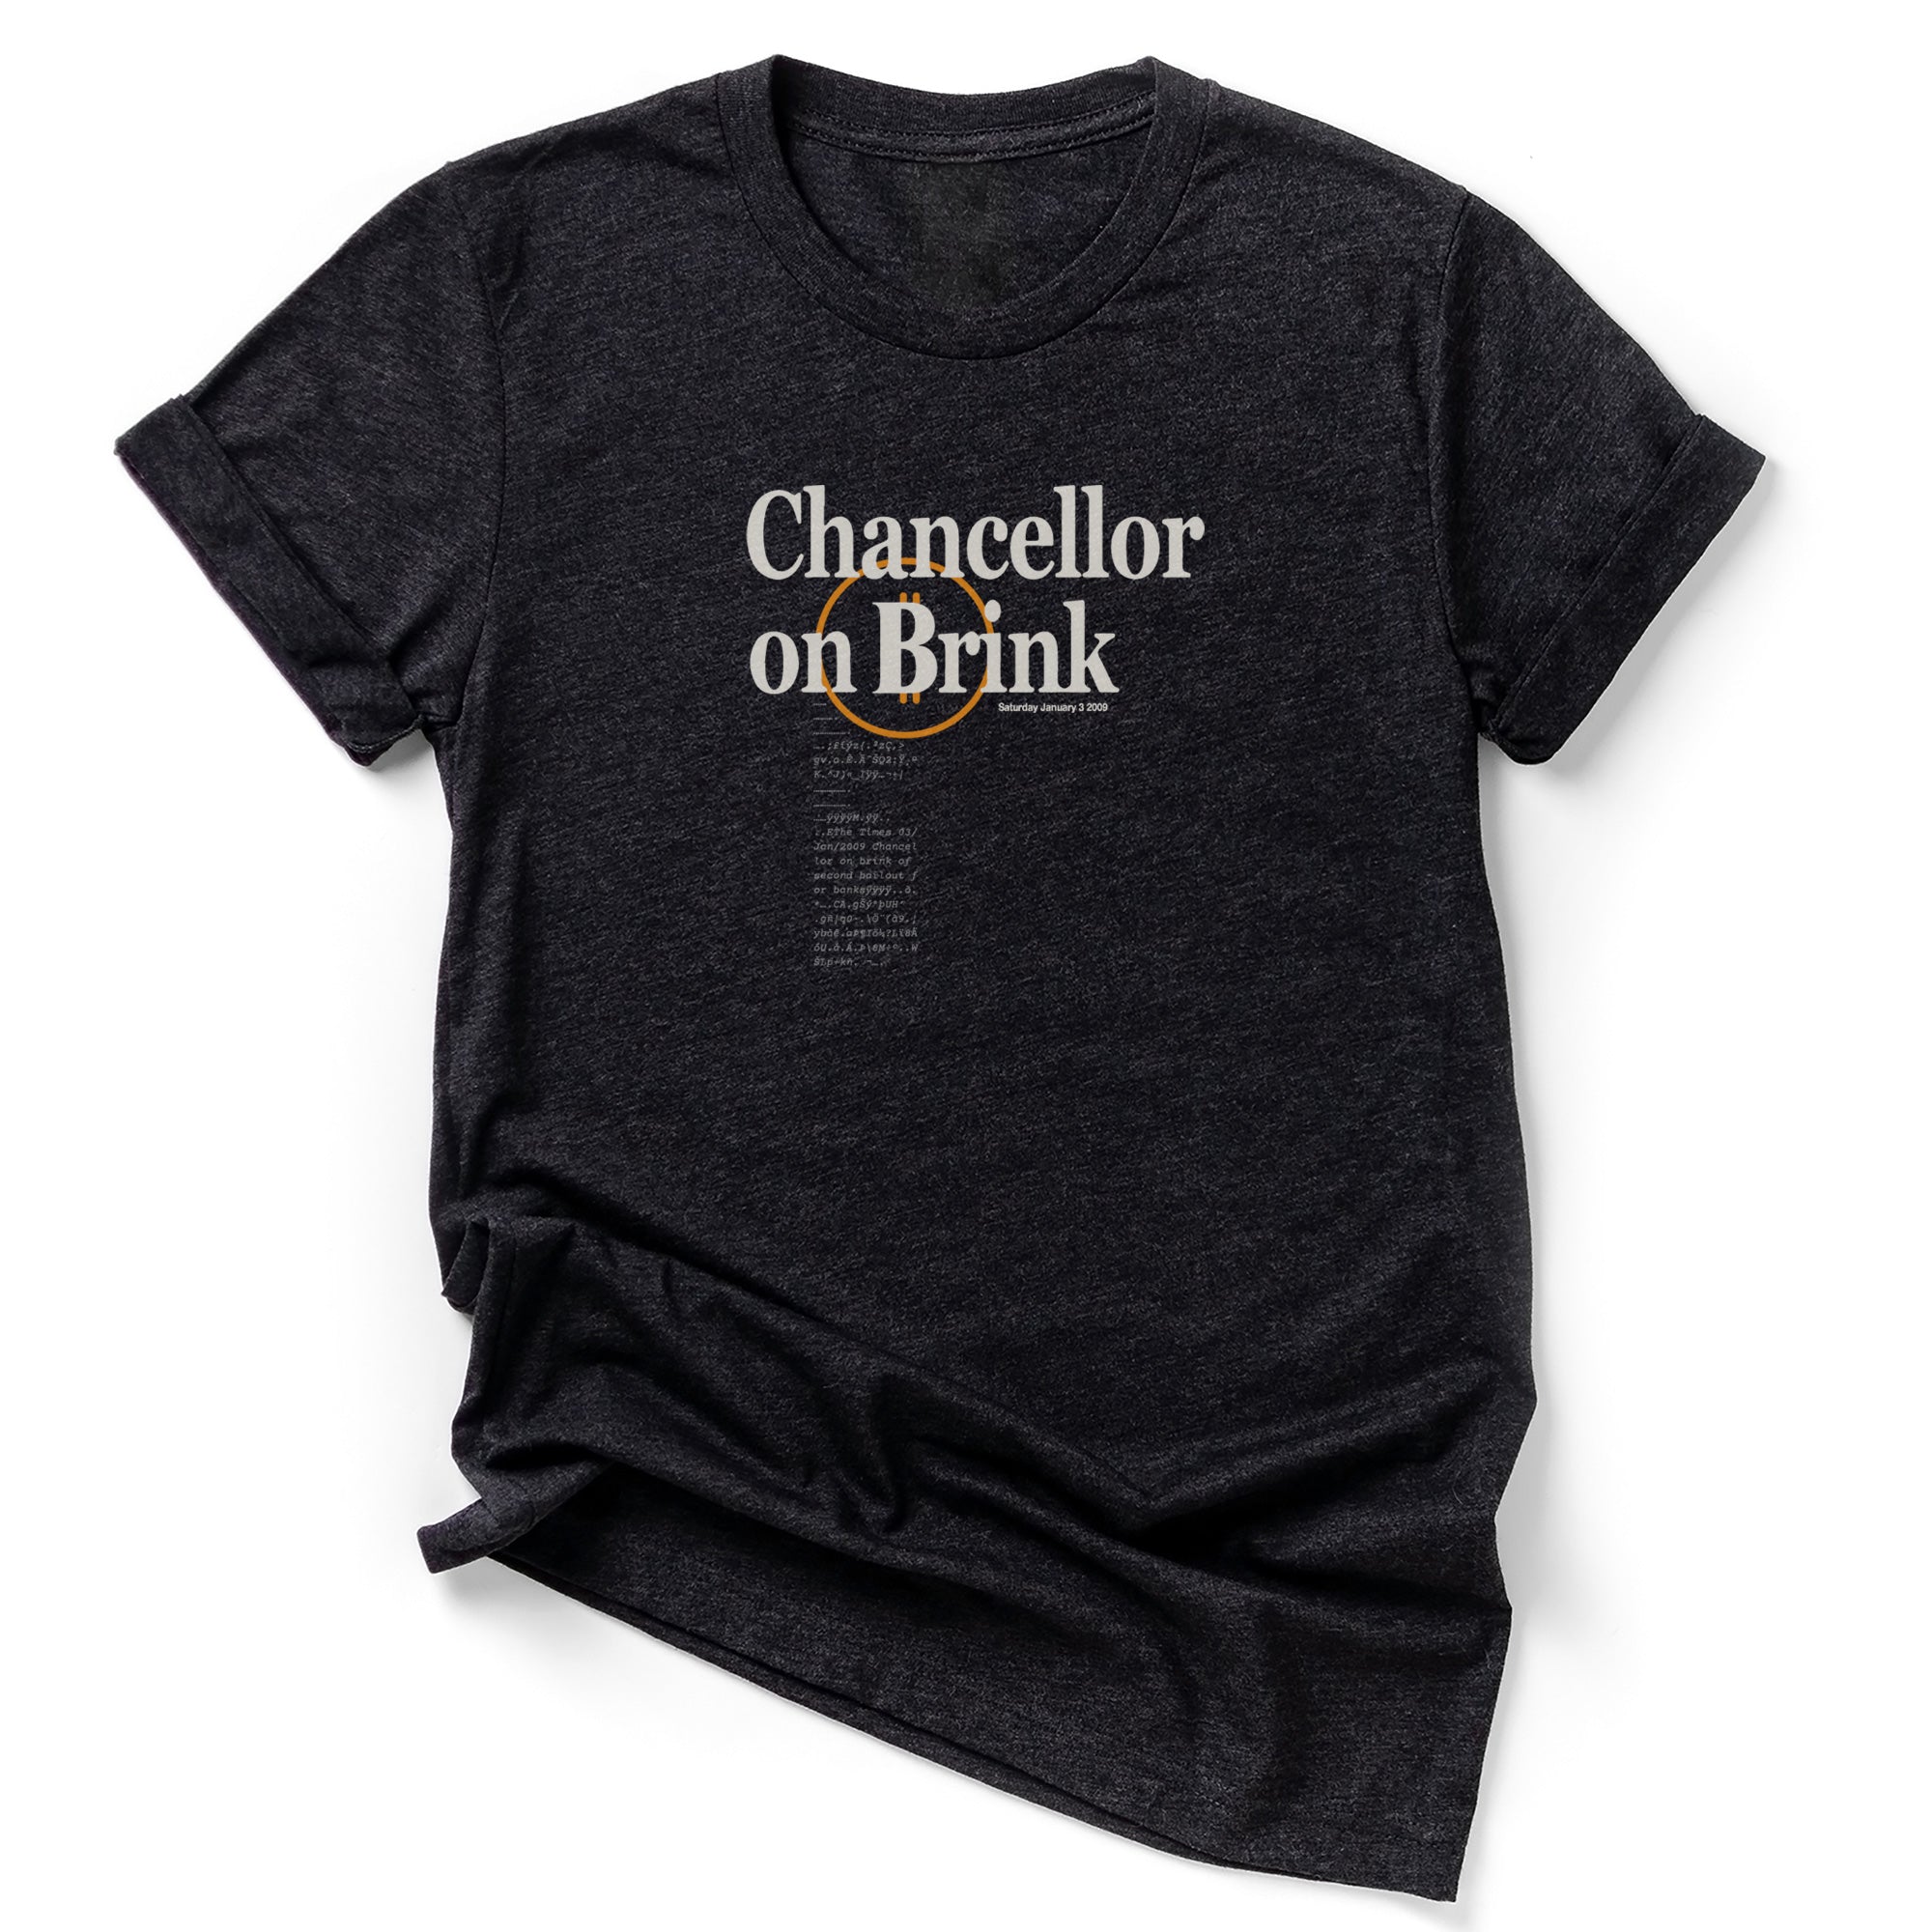 Chancellor on Brink T-Shirt